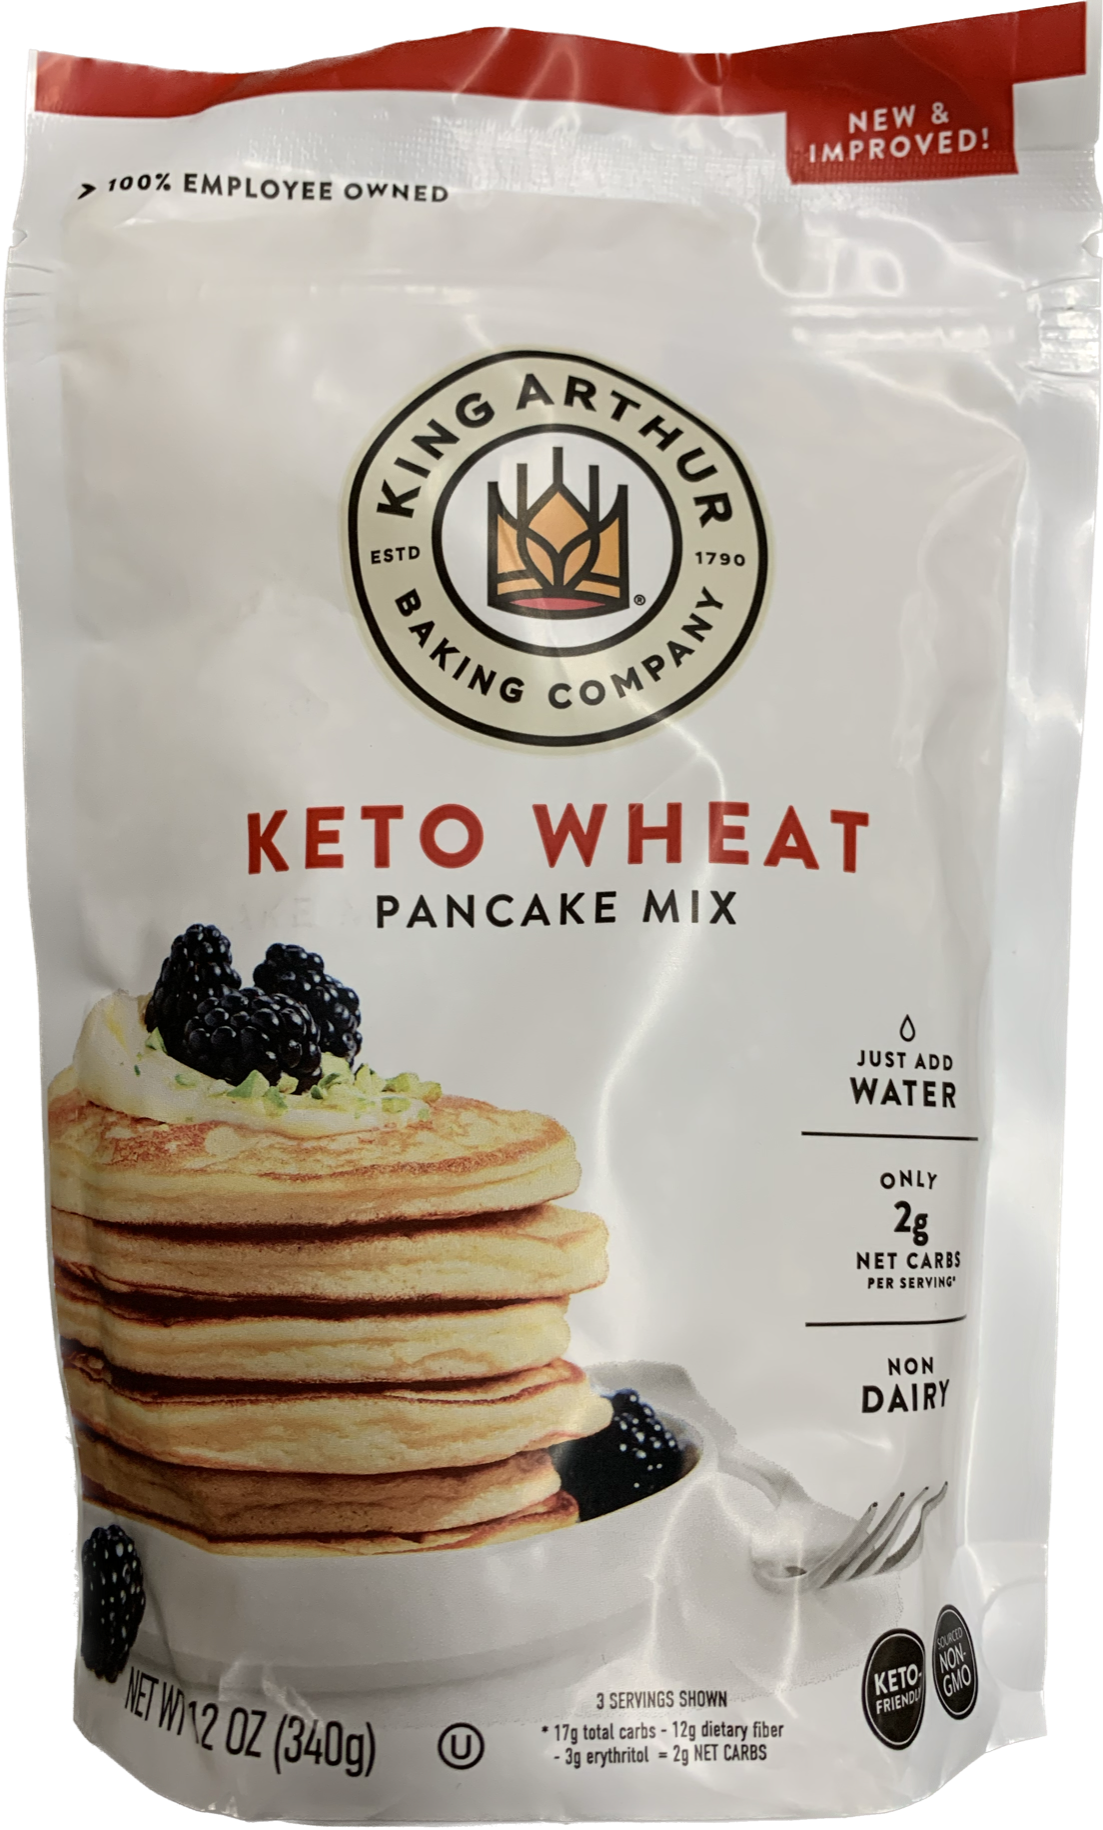 King Arthur Baking Co. Keto Wheat Pancake Mix 12 oz - High-quality Breakfast Foods by King Arthur Baking Co. at 